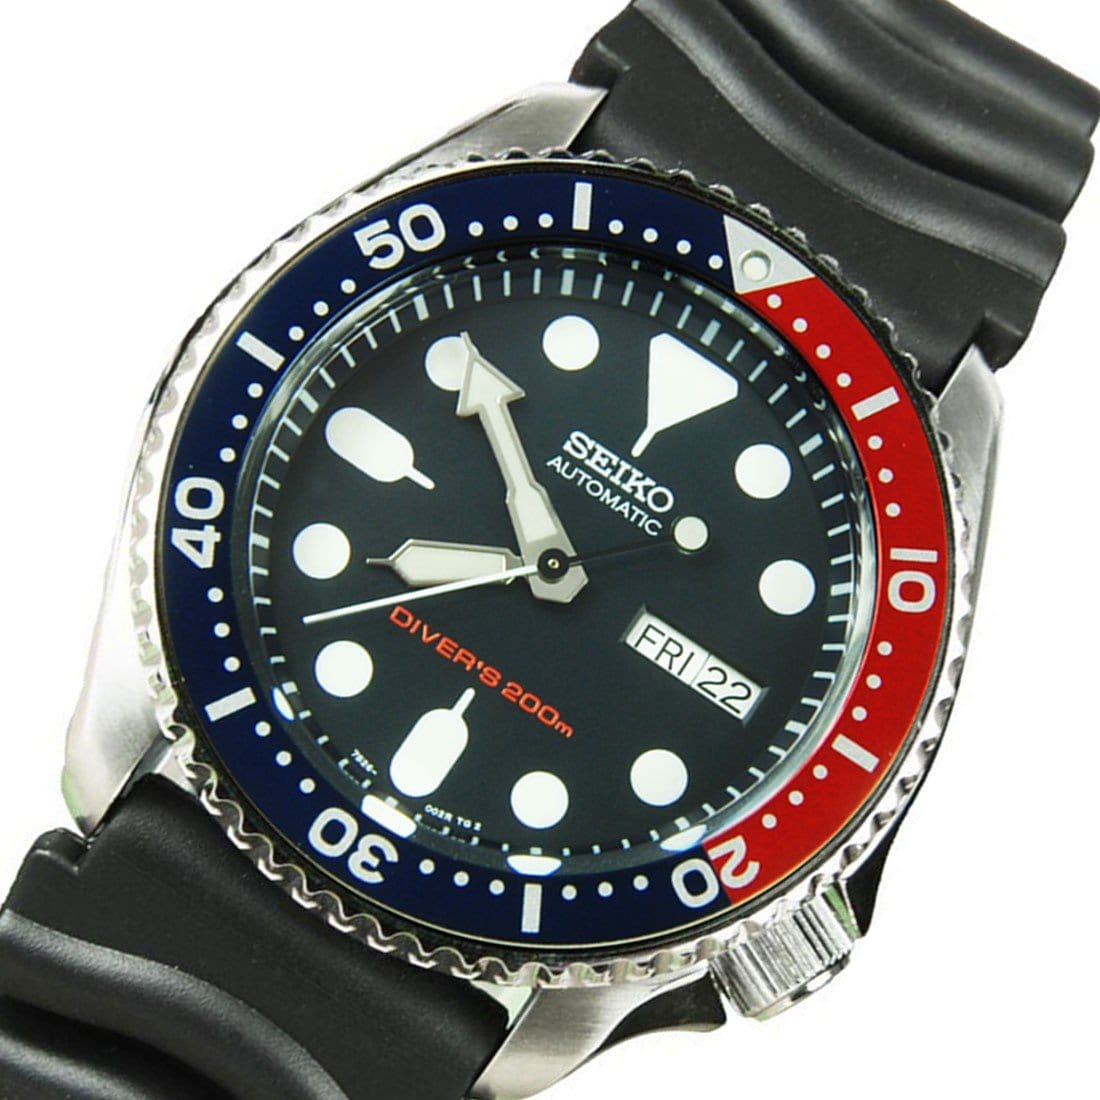 SKX009K1 SKX009K Seiko Automatic 200M Analog Male Divers Watch with Extra Strap